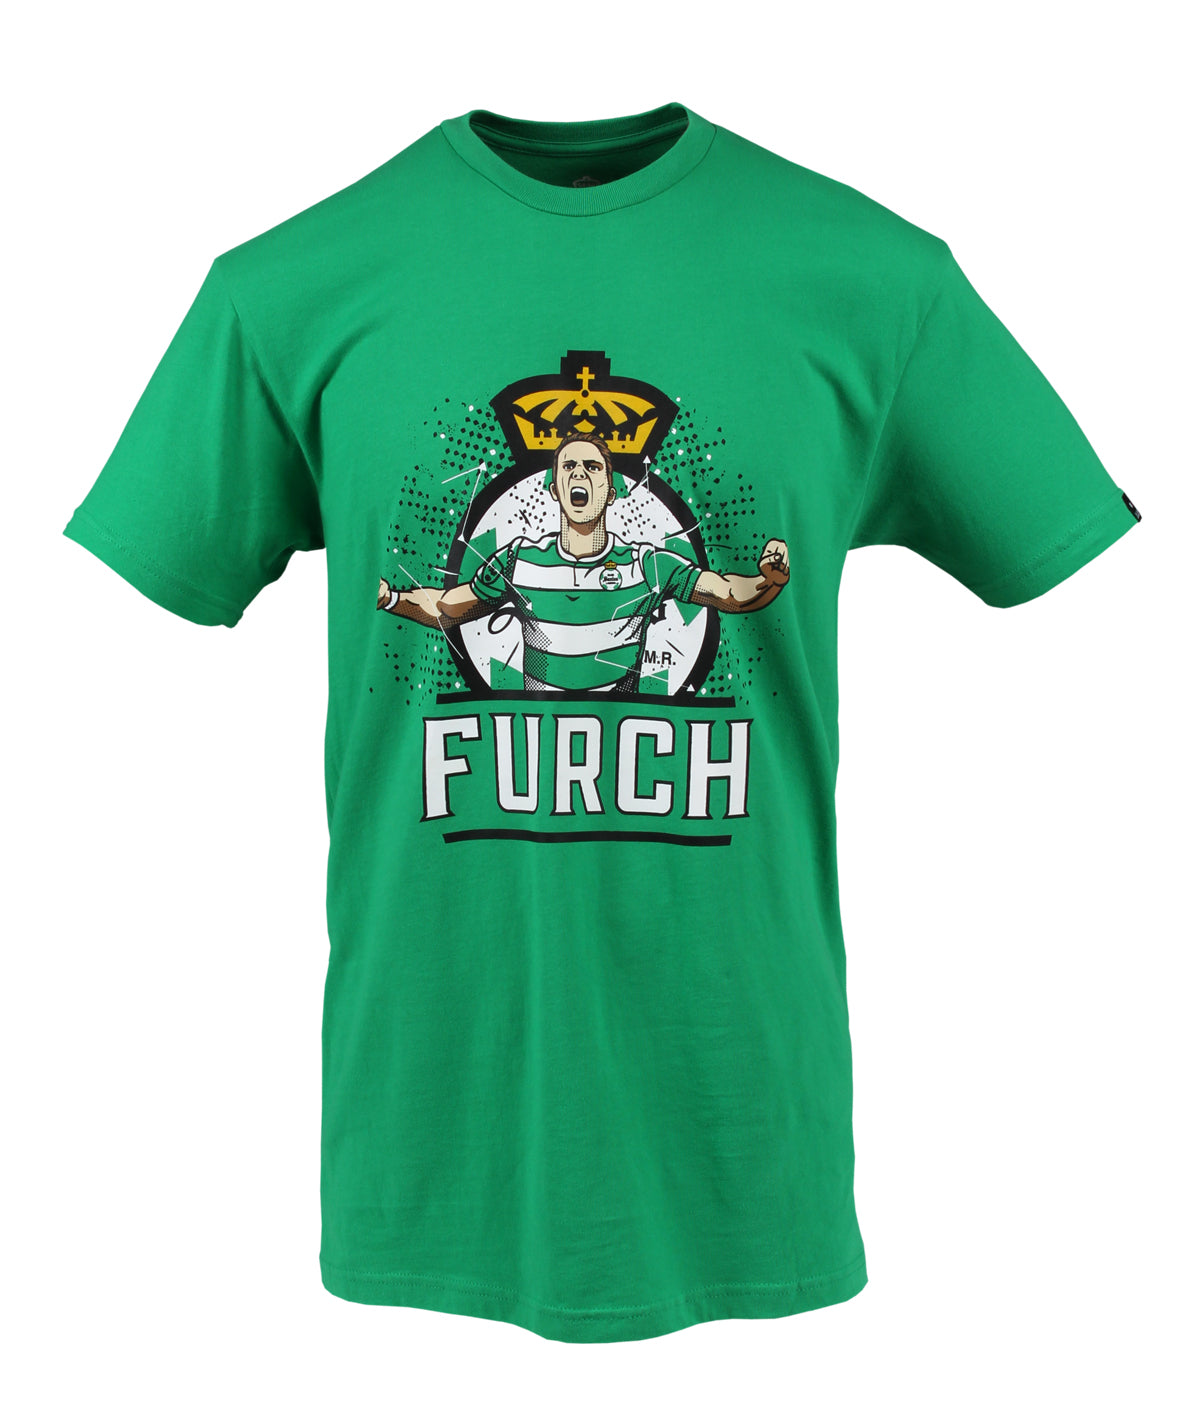 <transcy>Furch Adult T-Shirt</transcy>